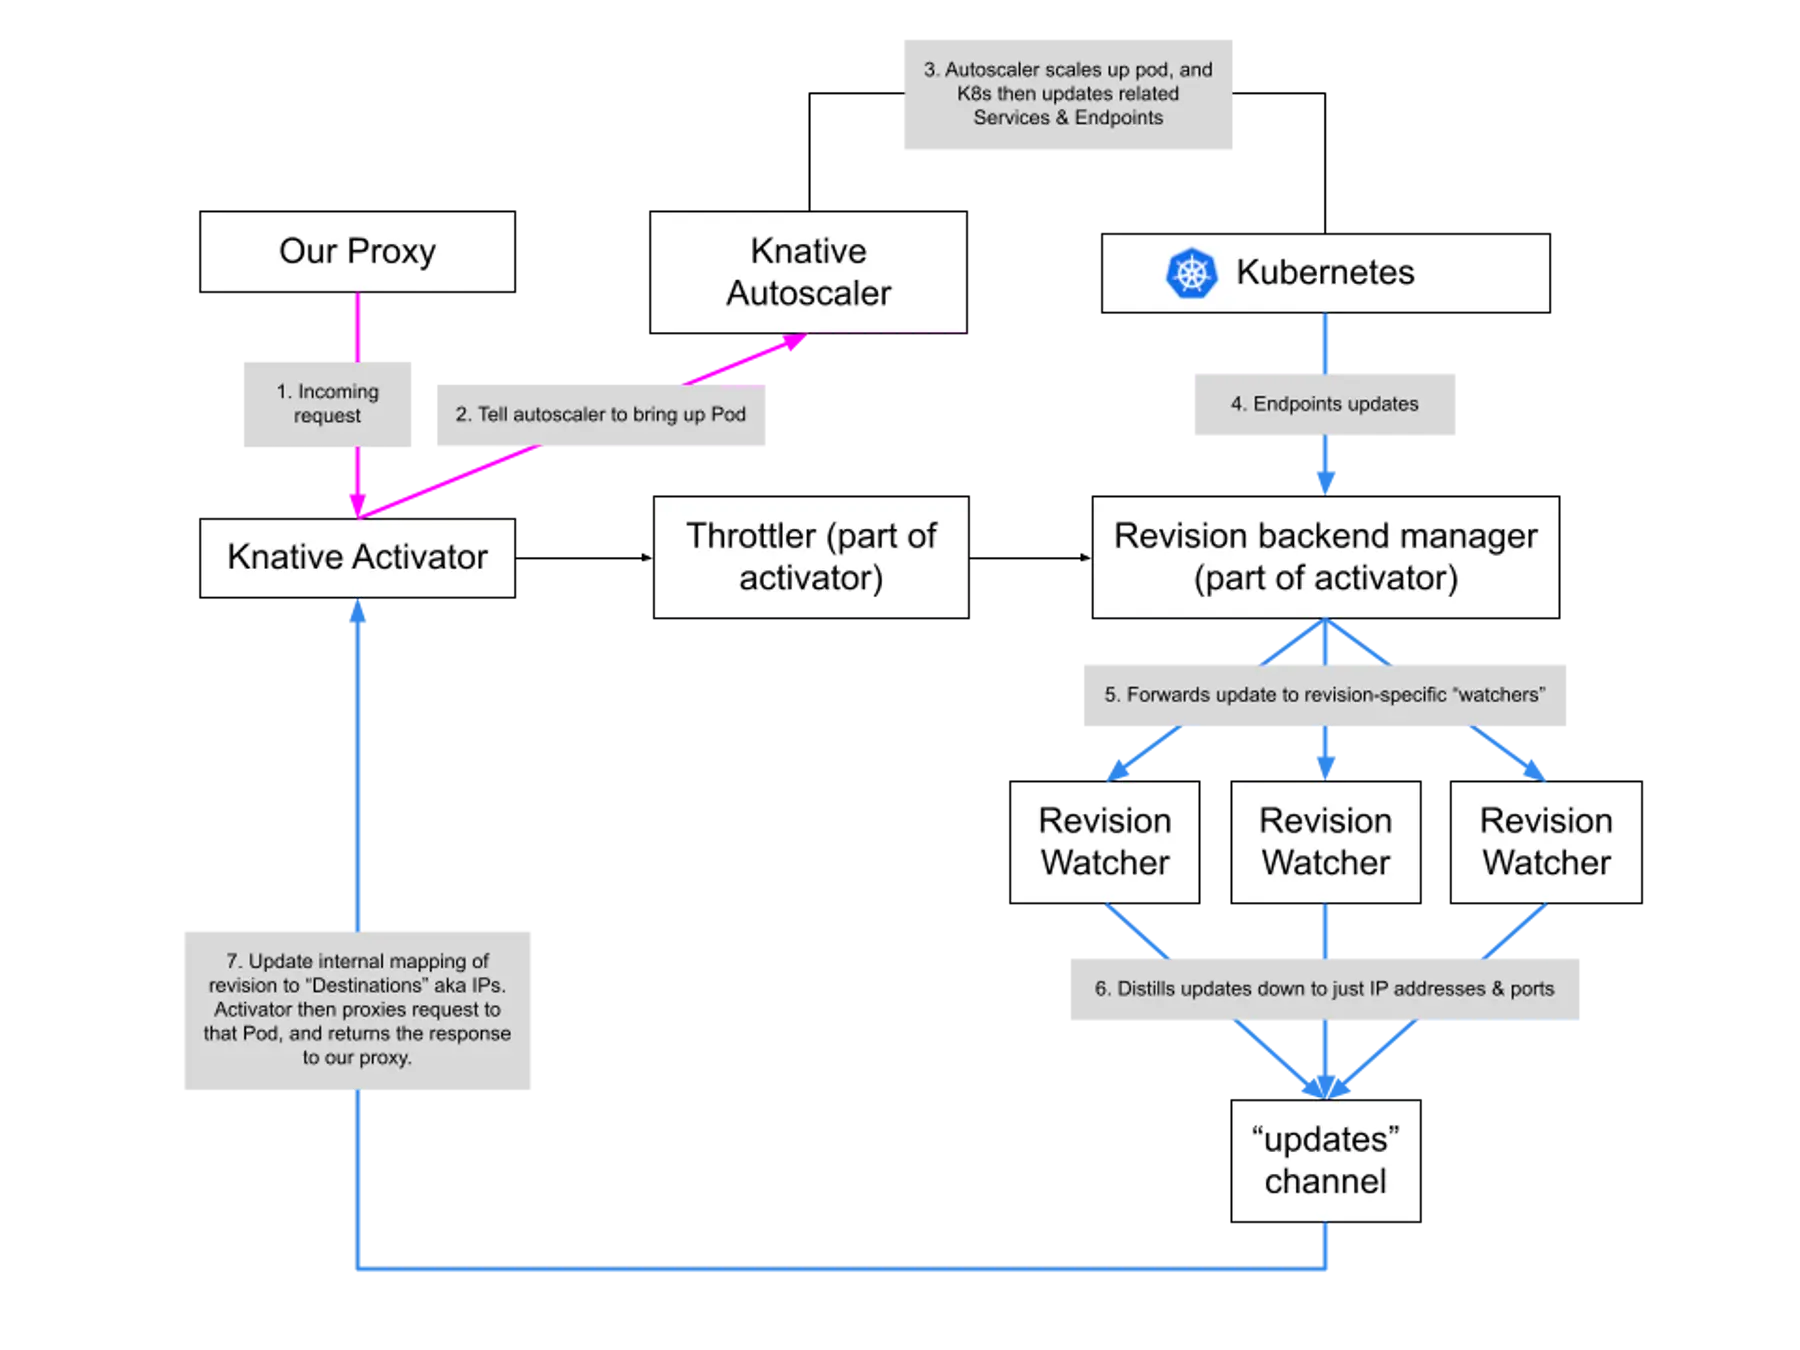 Summary of Knative activator architecture